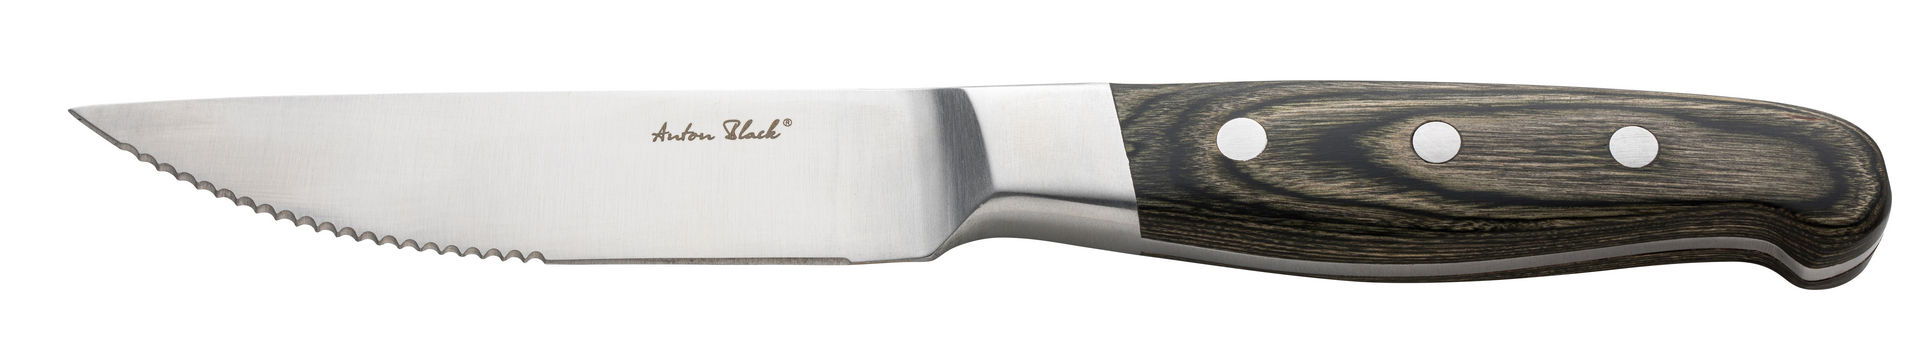 Large Wooden Handled Steak Knife - F10675-000000-B01012 (Pack of 12)